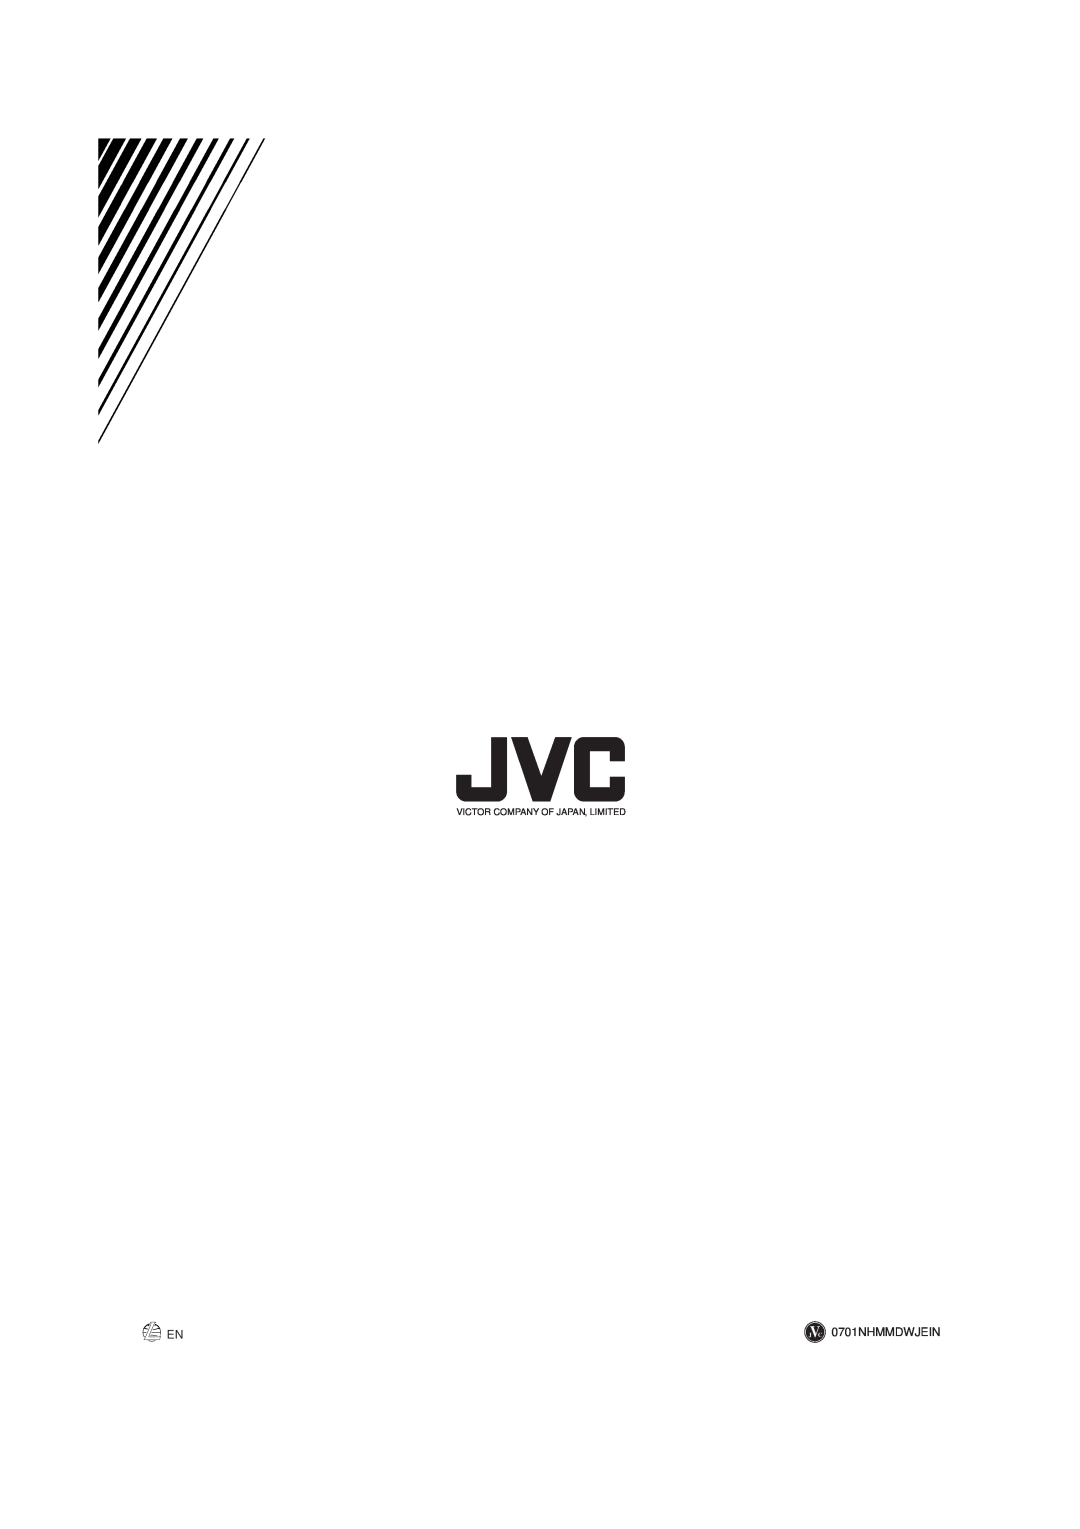 JVC RX-DP10VBK manual 0701NHMMDWJEIN, Victor Company Of Japan, Limited 